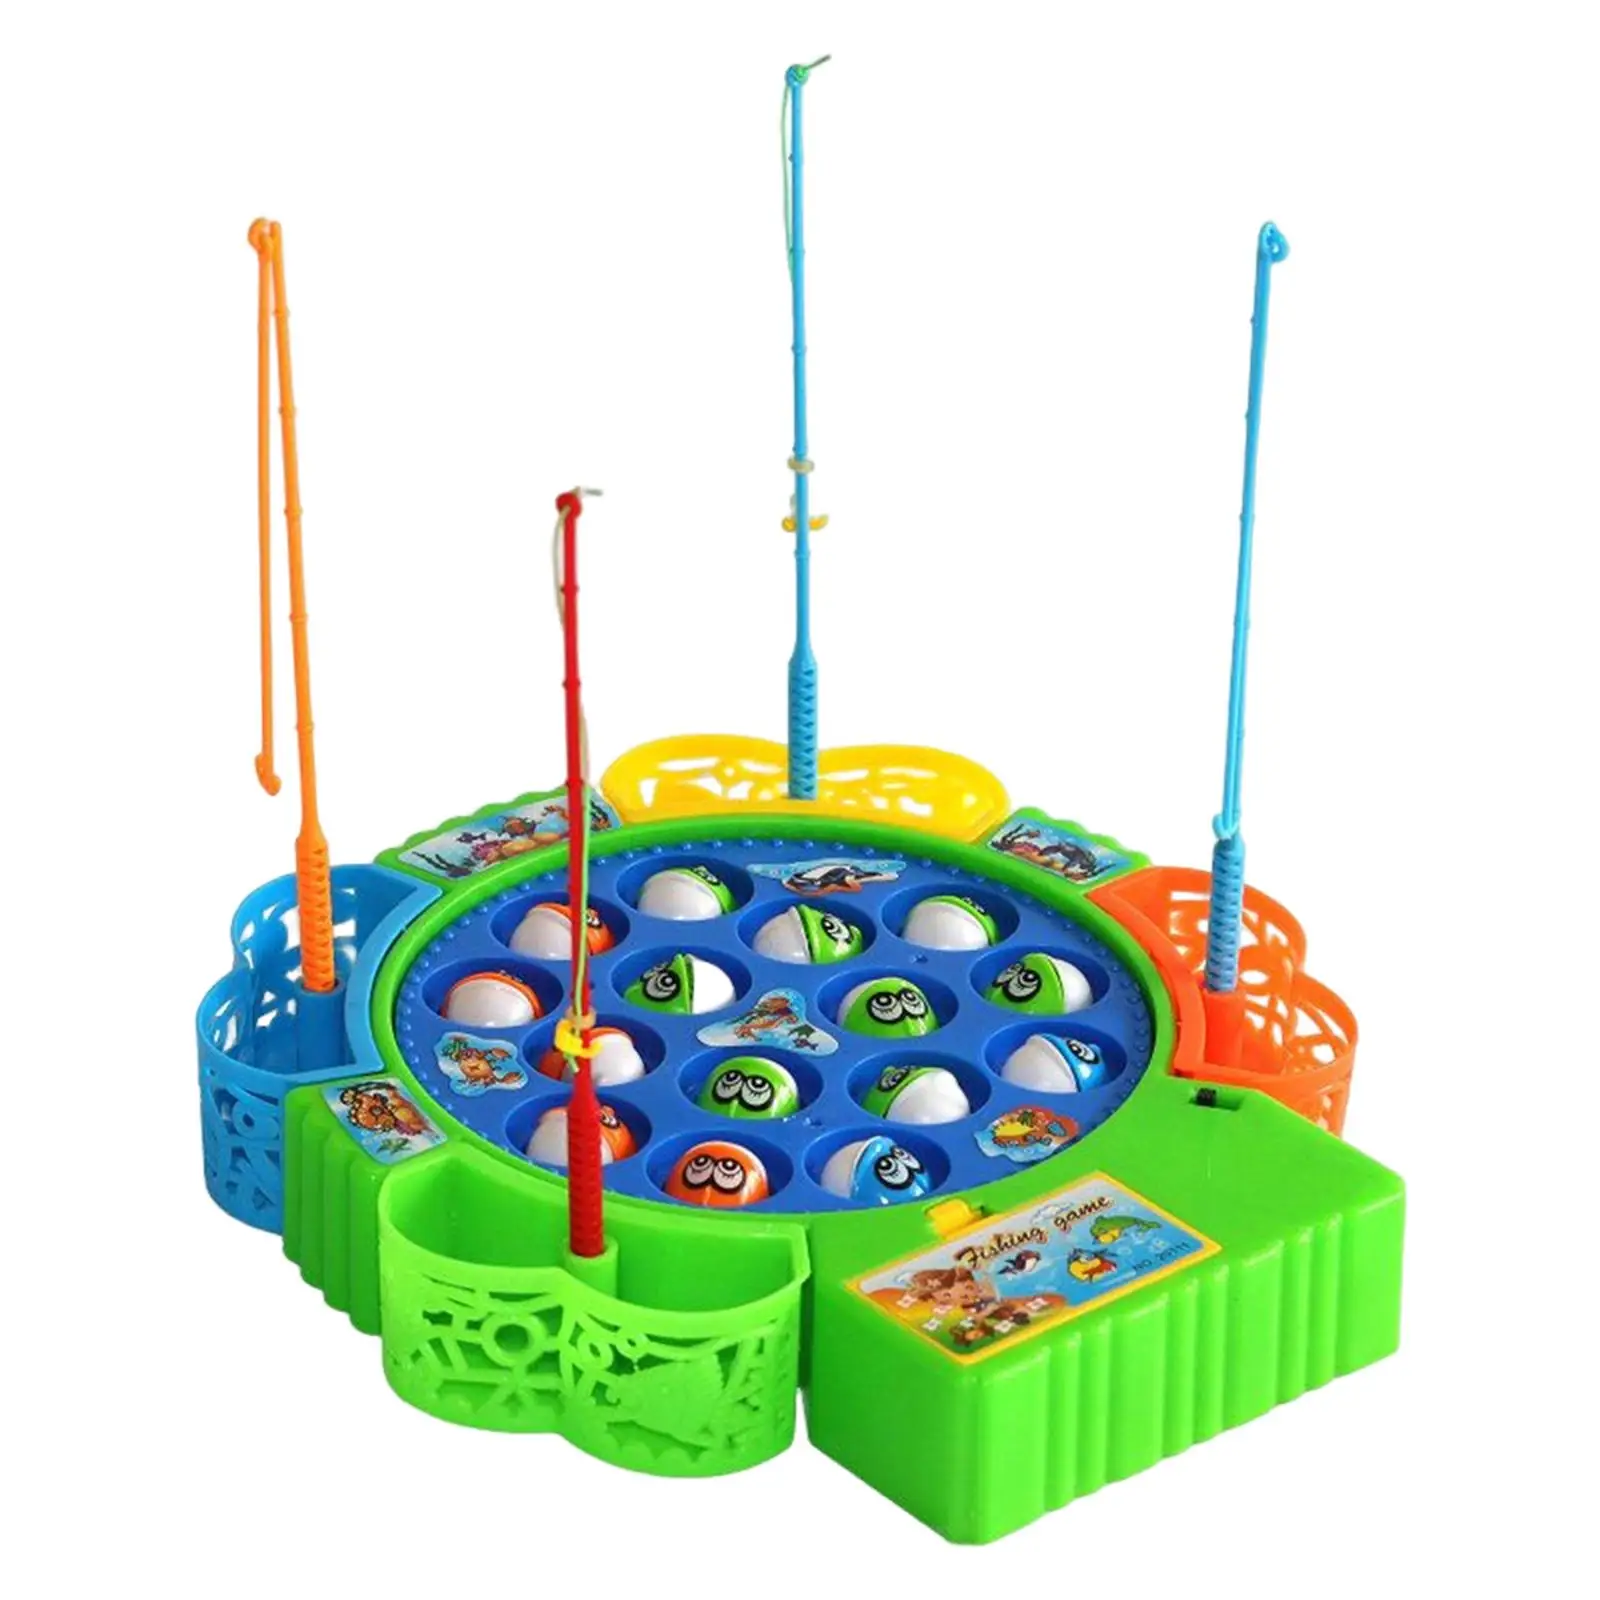 Rotating Fishing Game Kids Toy Ability Training for Preschool Kids Children